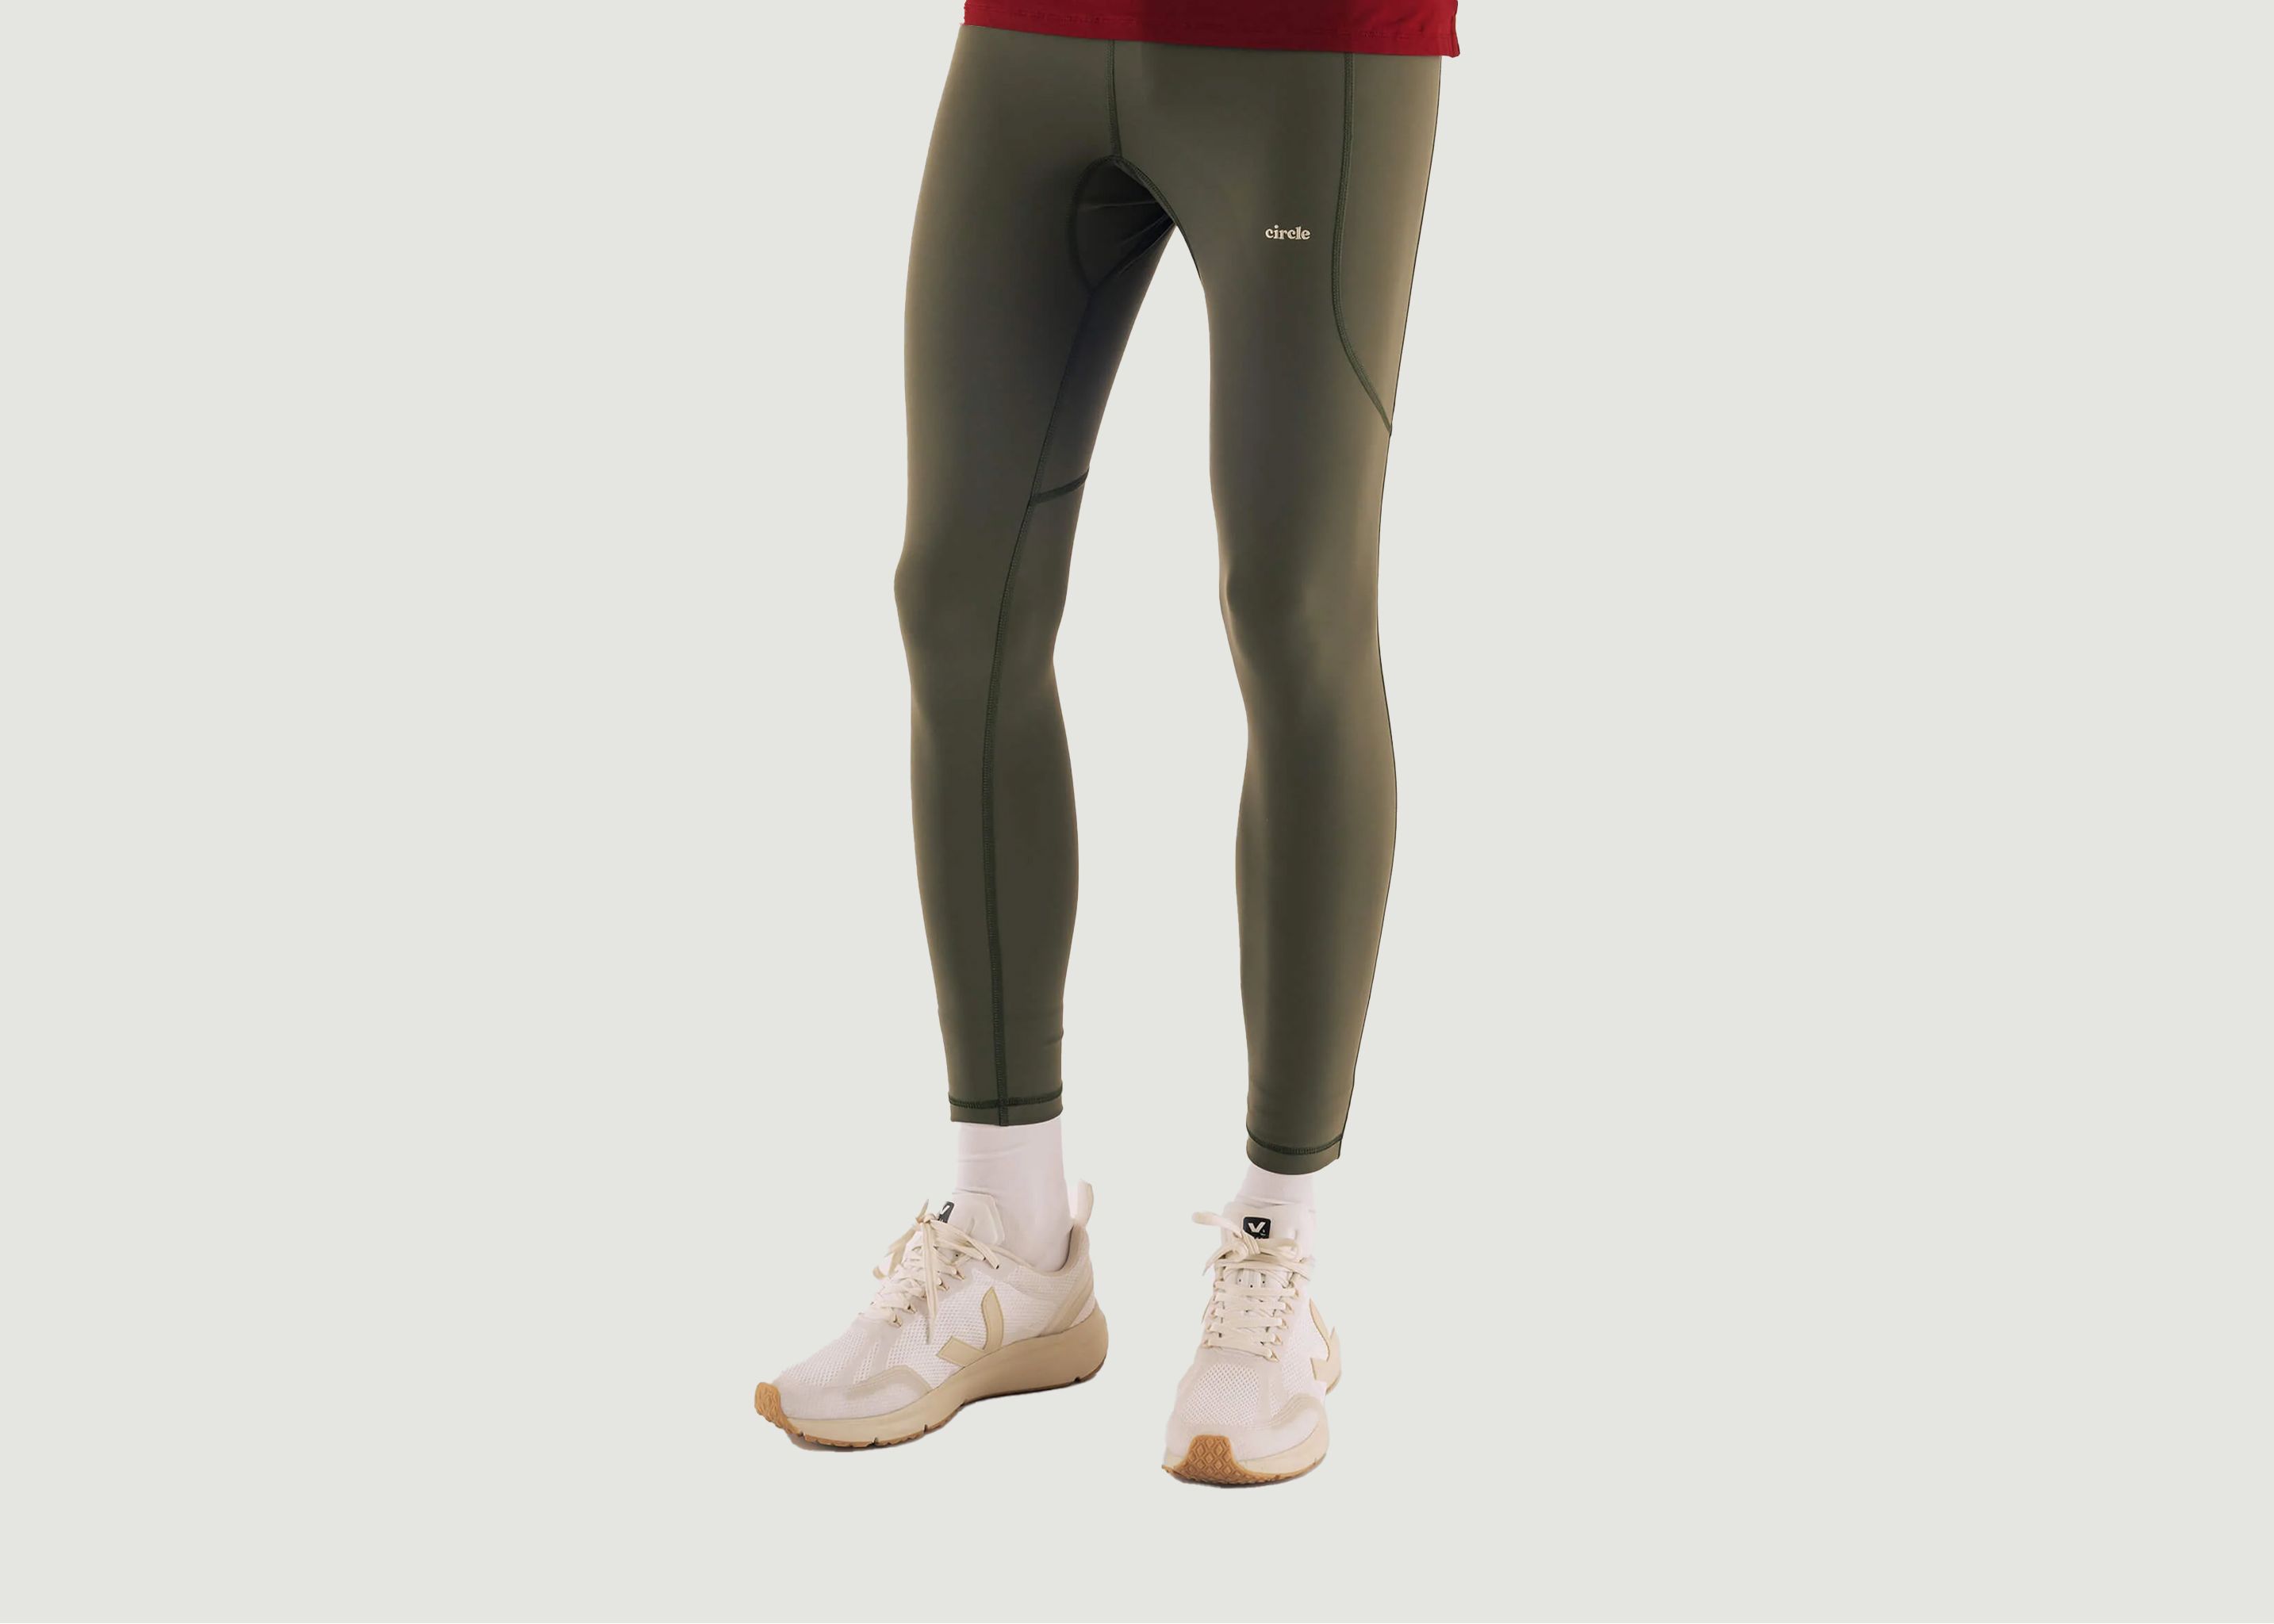 Legging läuft recycelt - Circle Sportswear